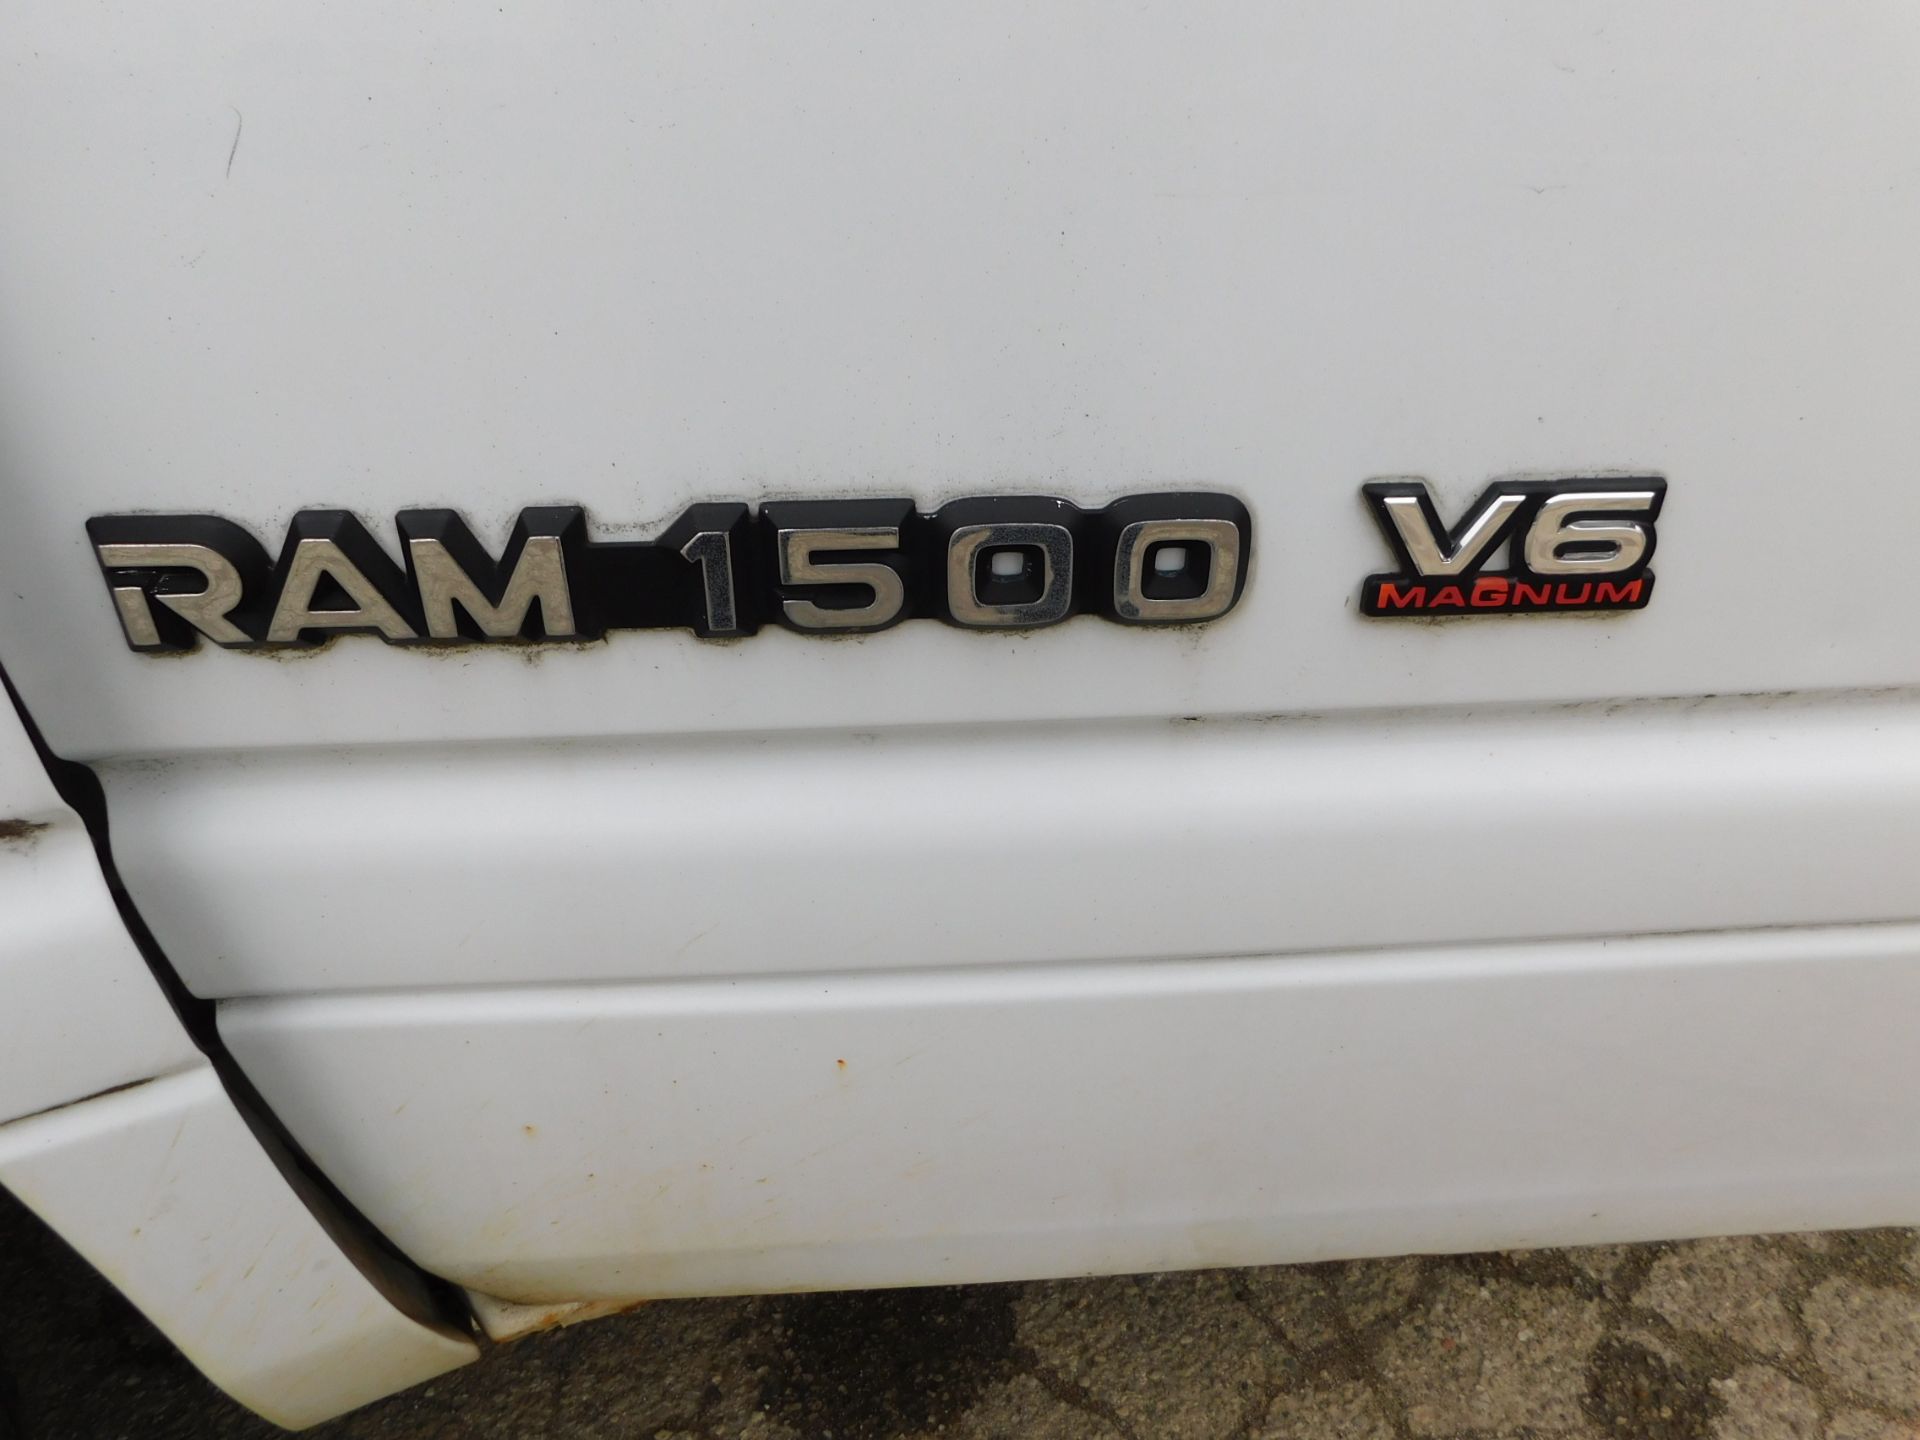 1999 Dodge Ram 1500 Pickup Truck, V6 Magnum, Regular Cab, Auto, 8' Bed, Toolbox, Diesel Fuel Tank - Image 23 of 24